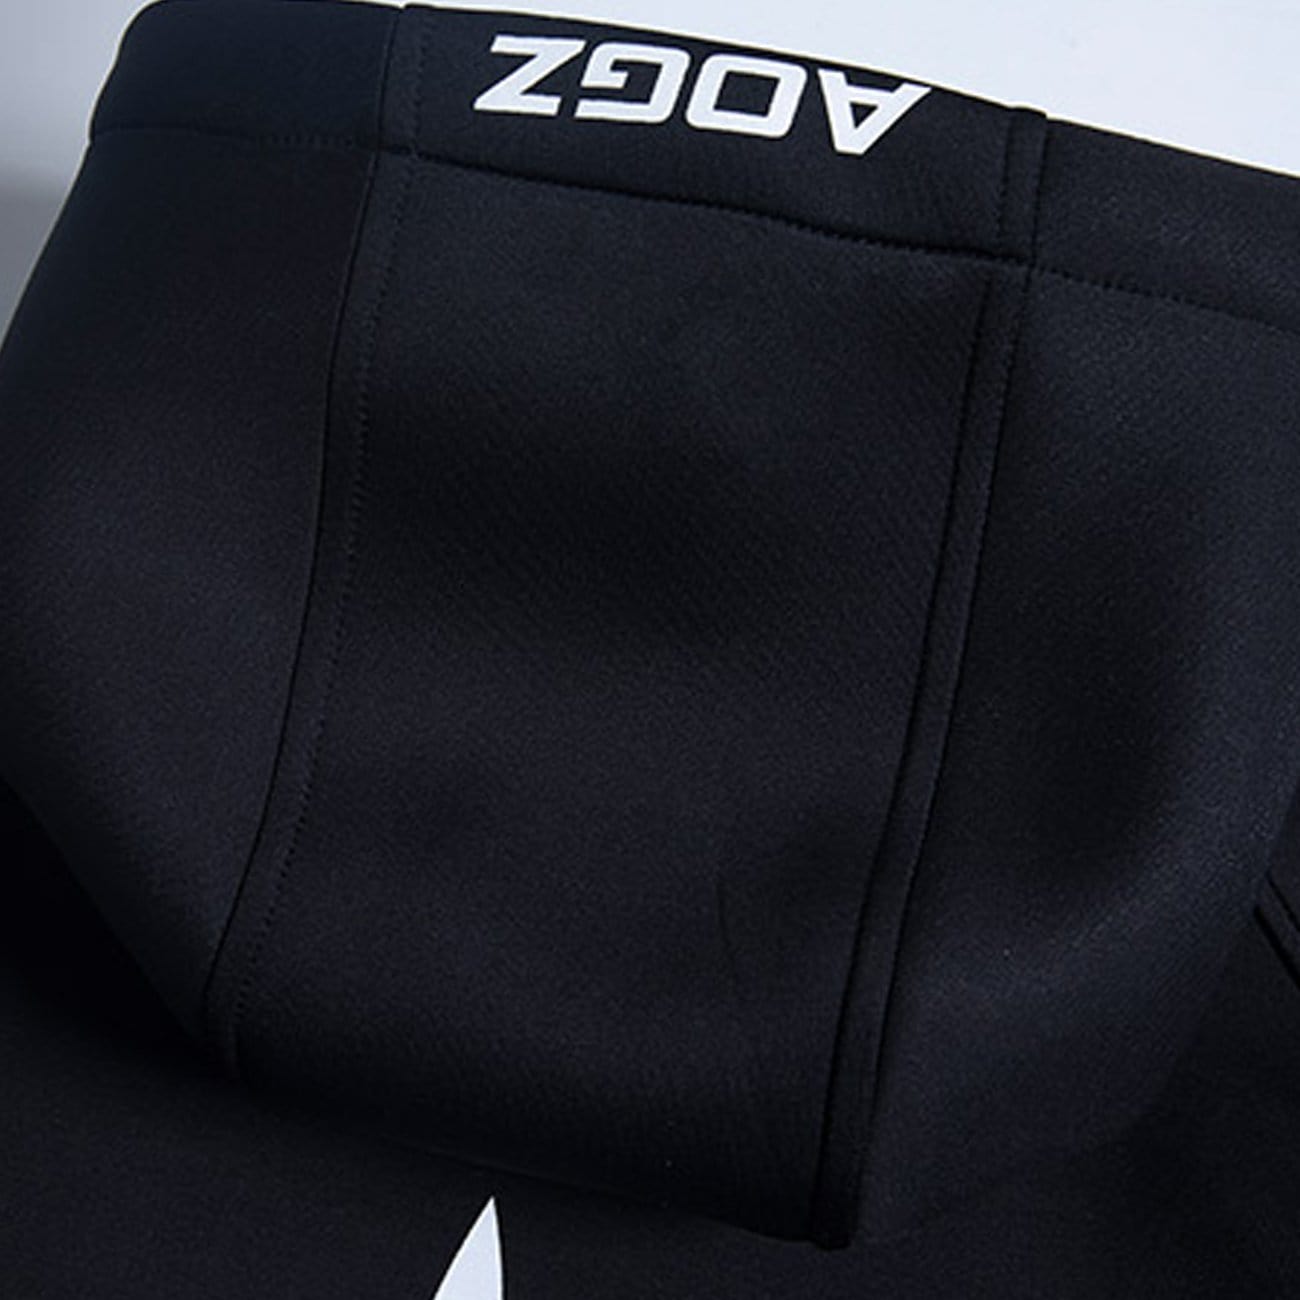 Combat Oblique Zipper Print Jacket Streetwear Brand Techwear Combat Tactical YUGEN THEORY